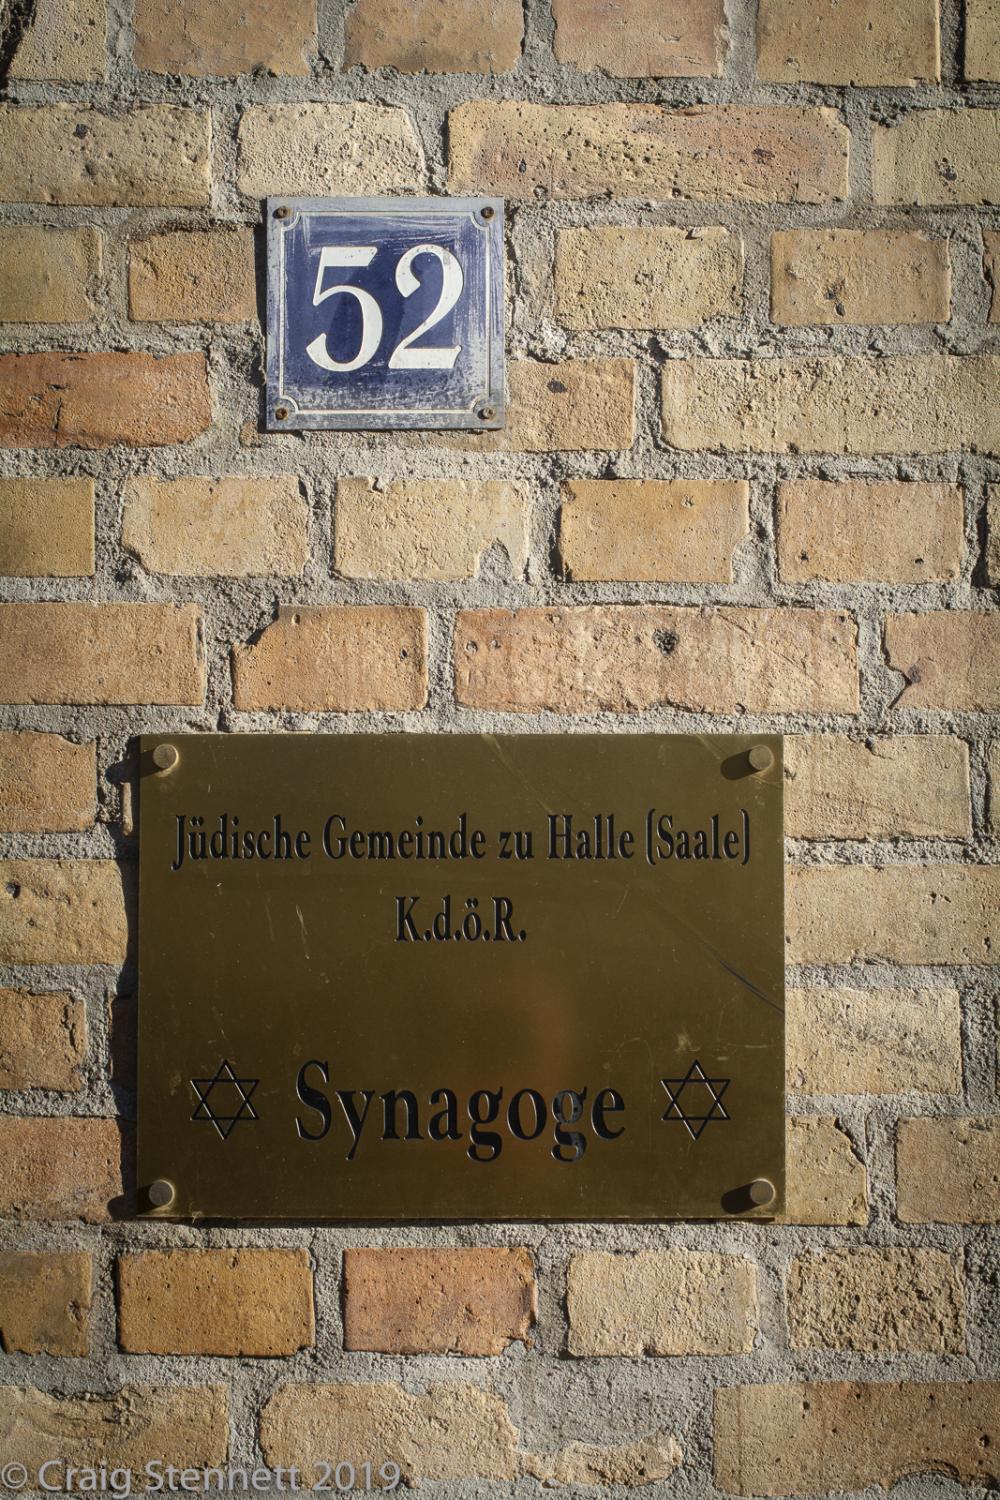 Synagogue Shooting, Halle (Saale), Germany